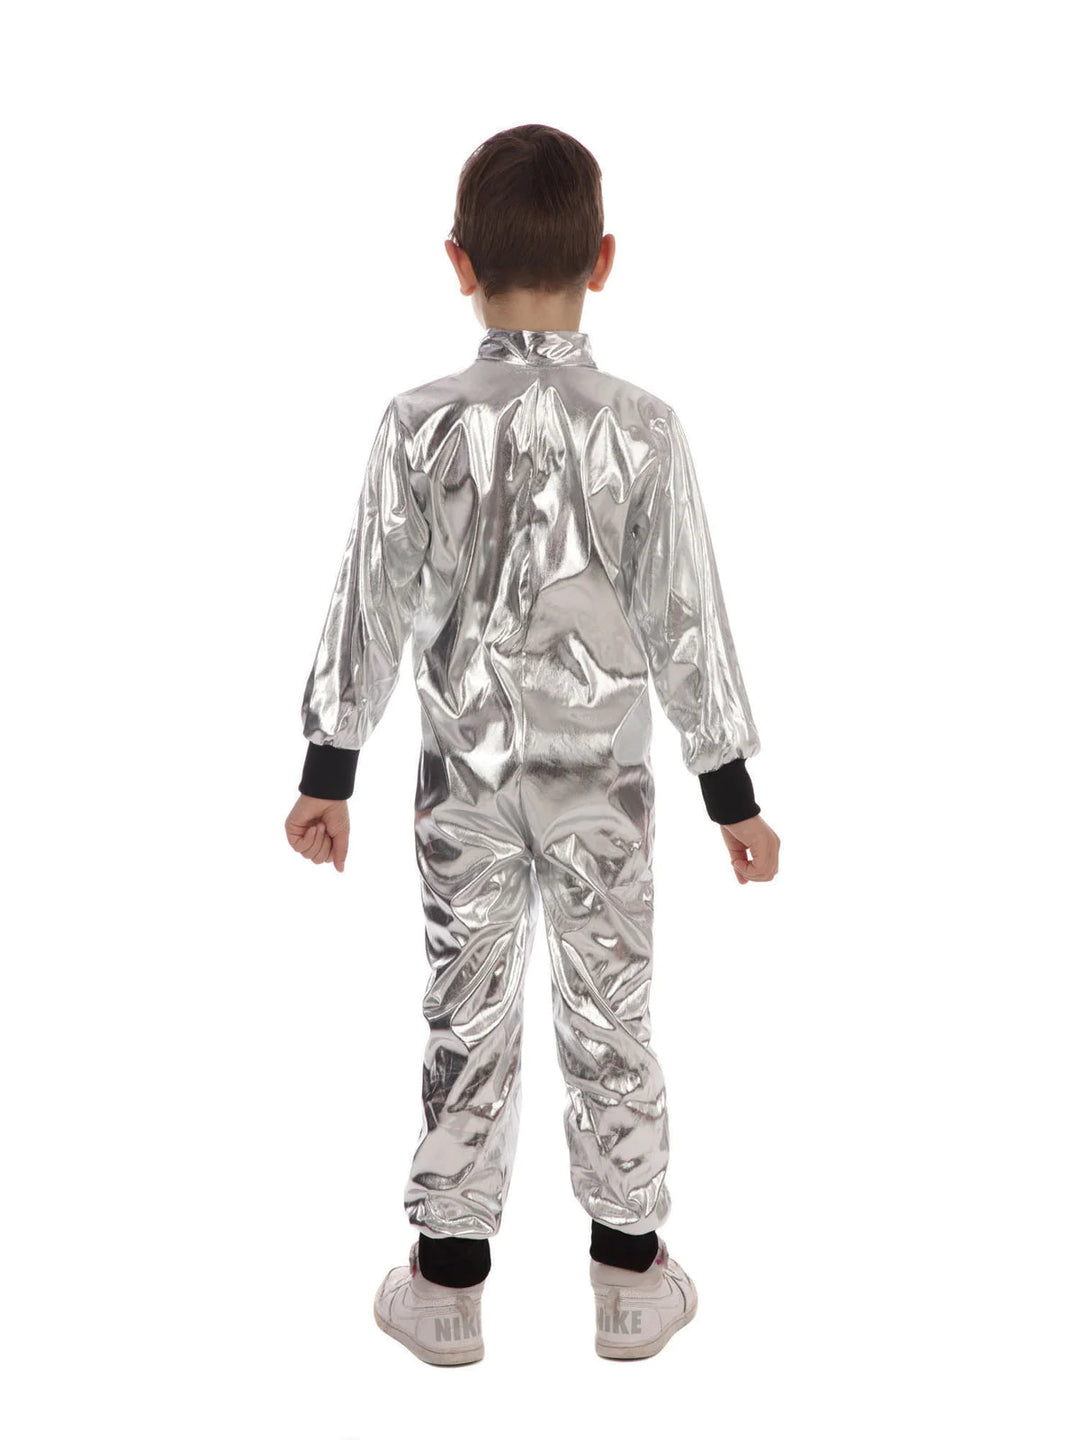 Astronaut Costume Boys Shiny Silver Space Suit_3